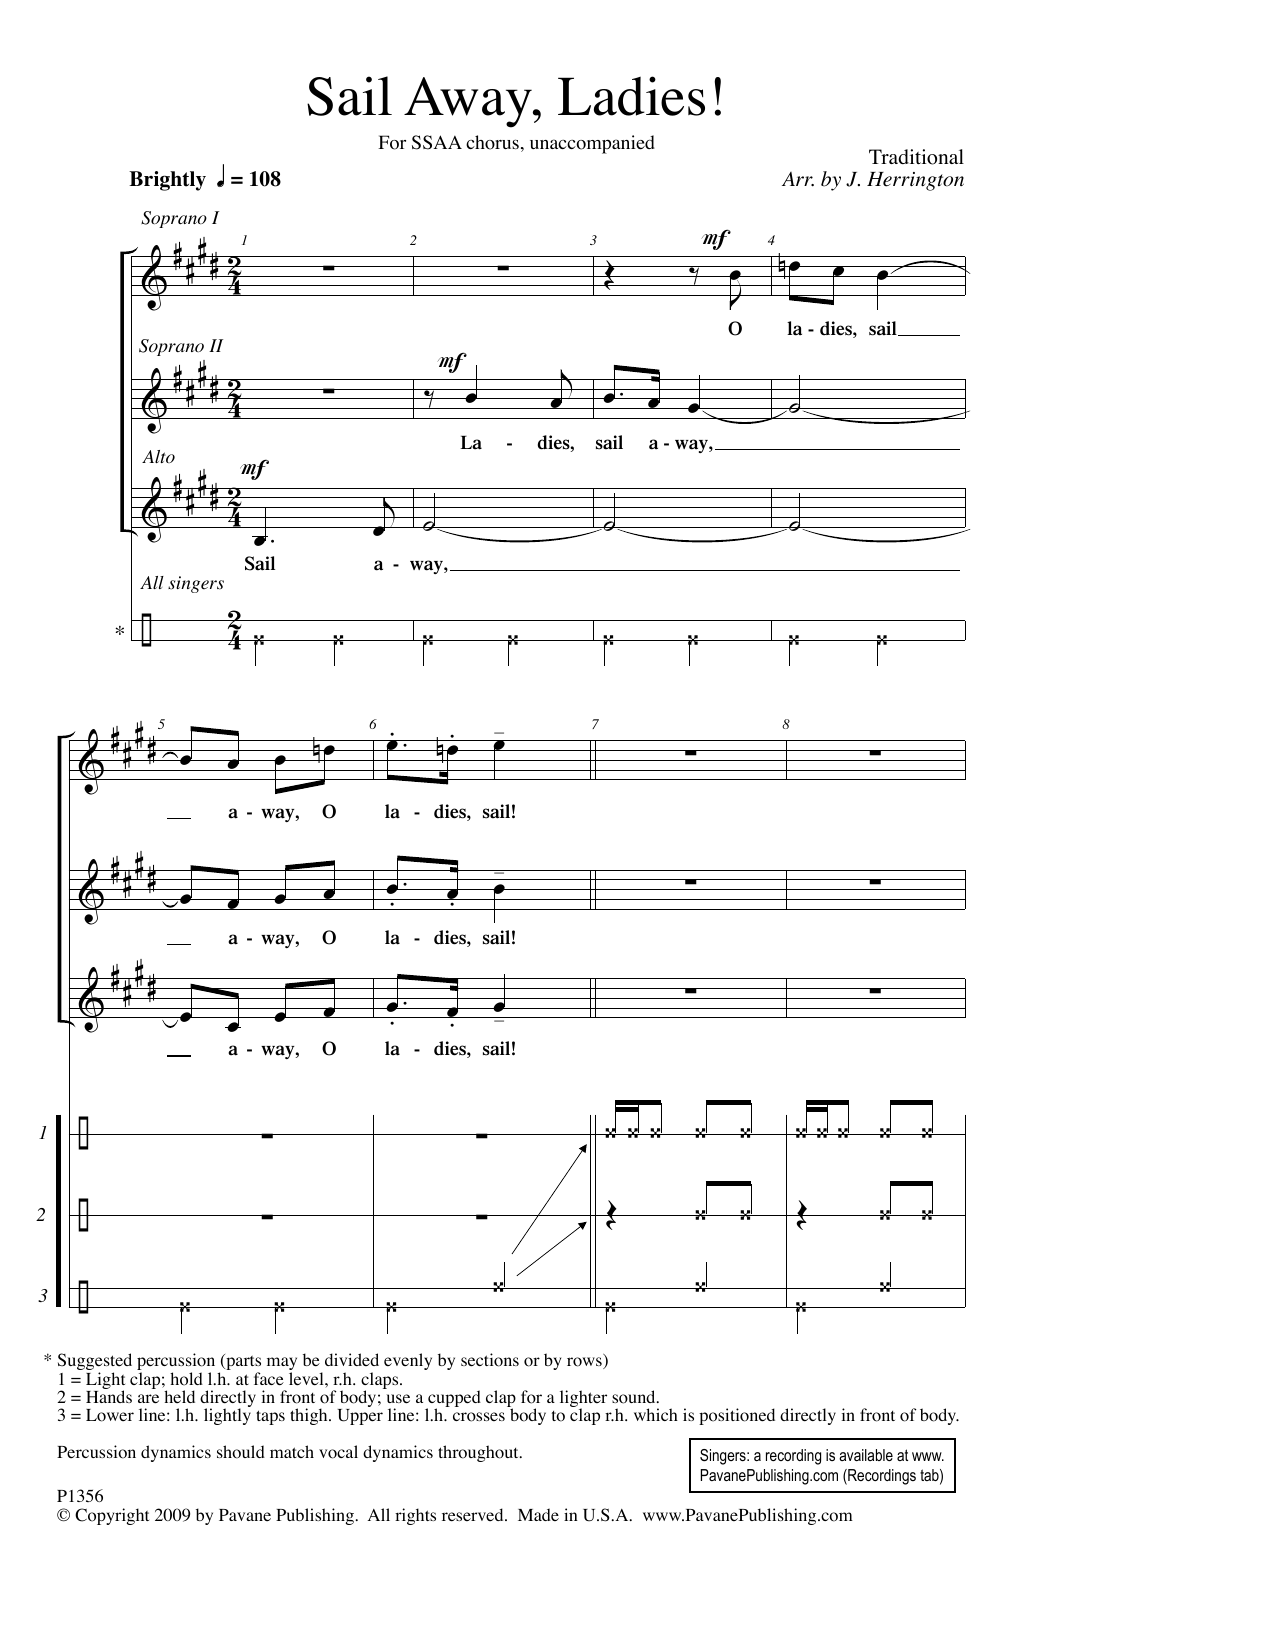 Judith Herrington Sail Away, Ladies! Sheet Music Notes & Chords for SSA Choir - Download or Print PDF